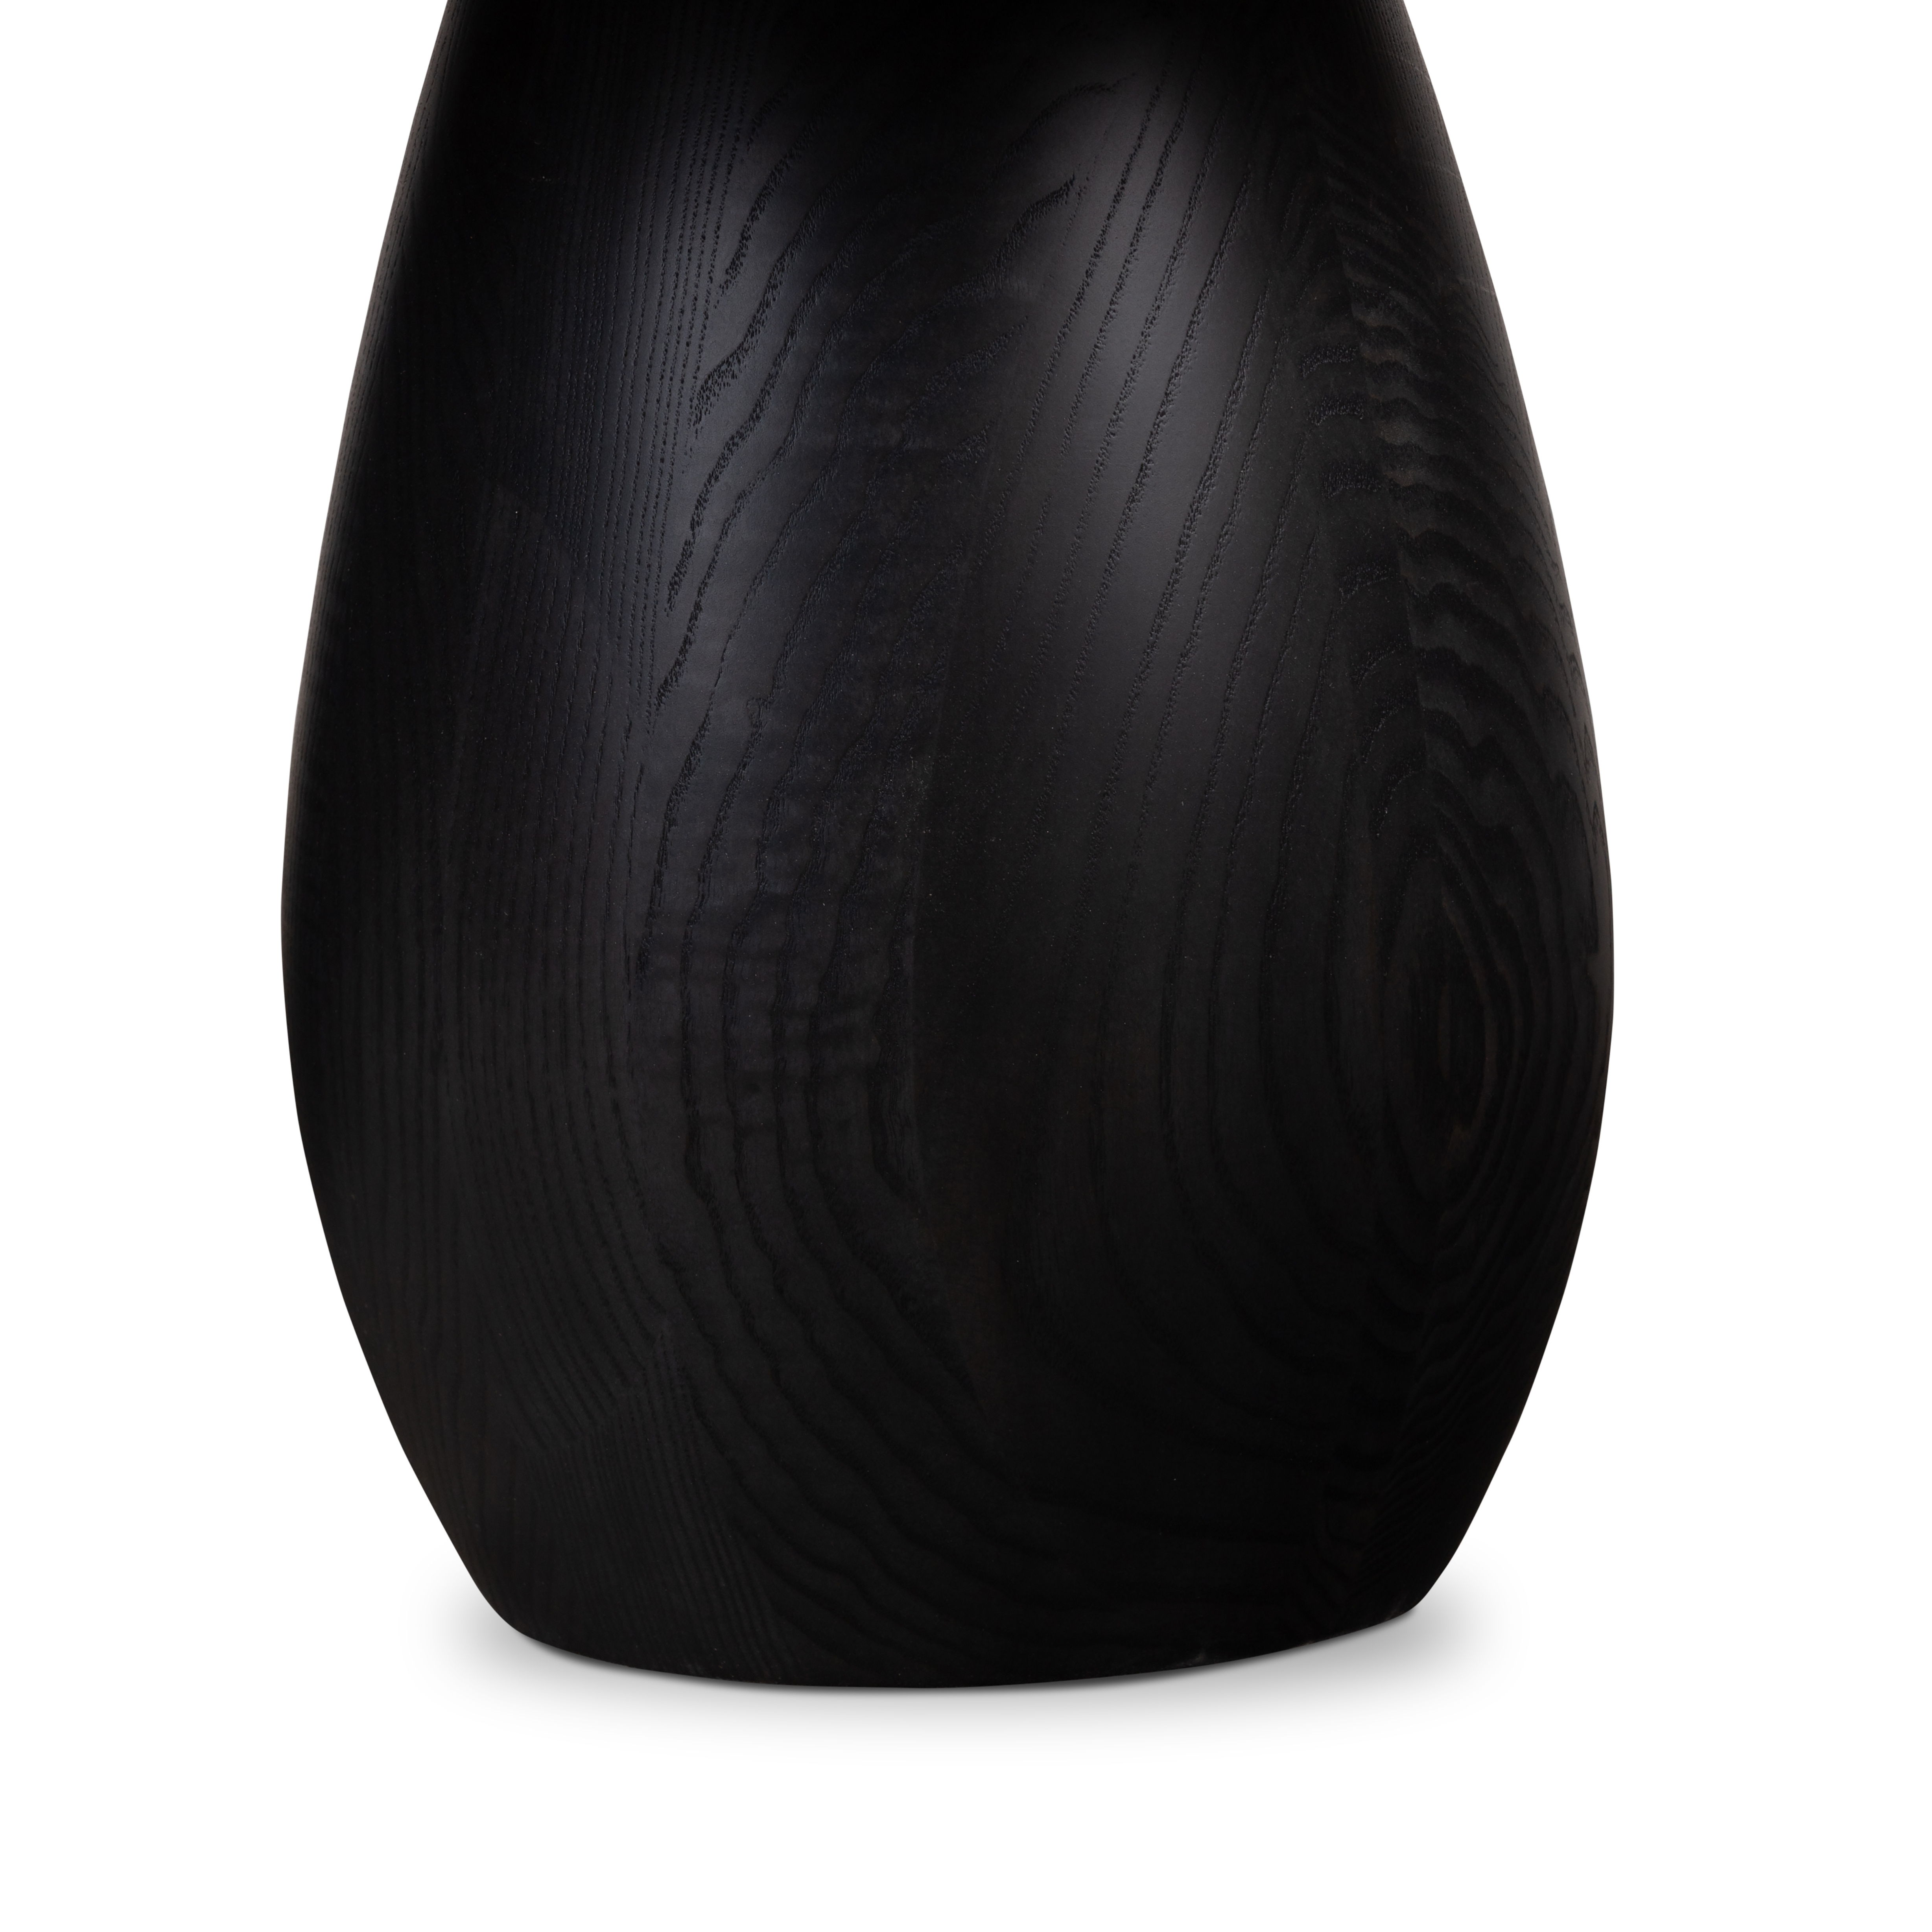 Merla Wood Coffee Table-Black Wash Ash - Image 5